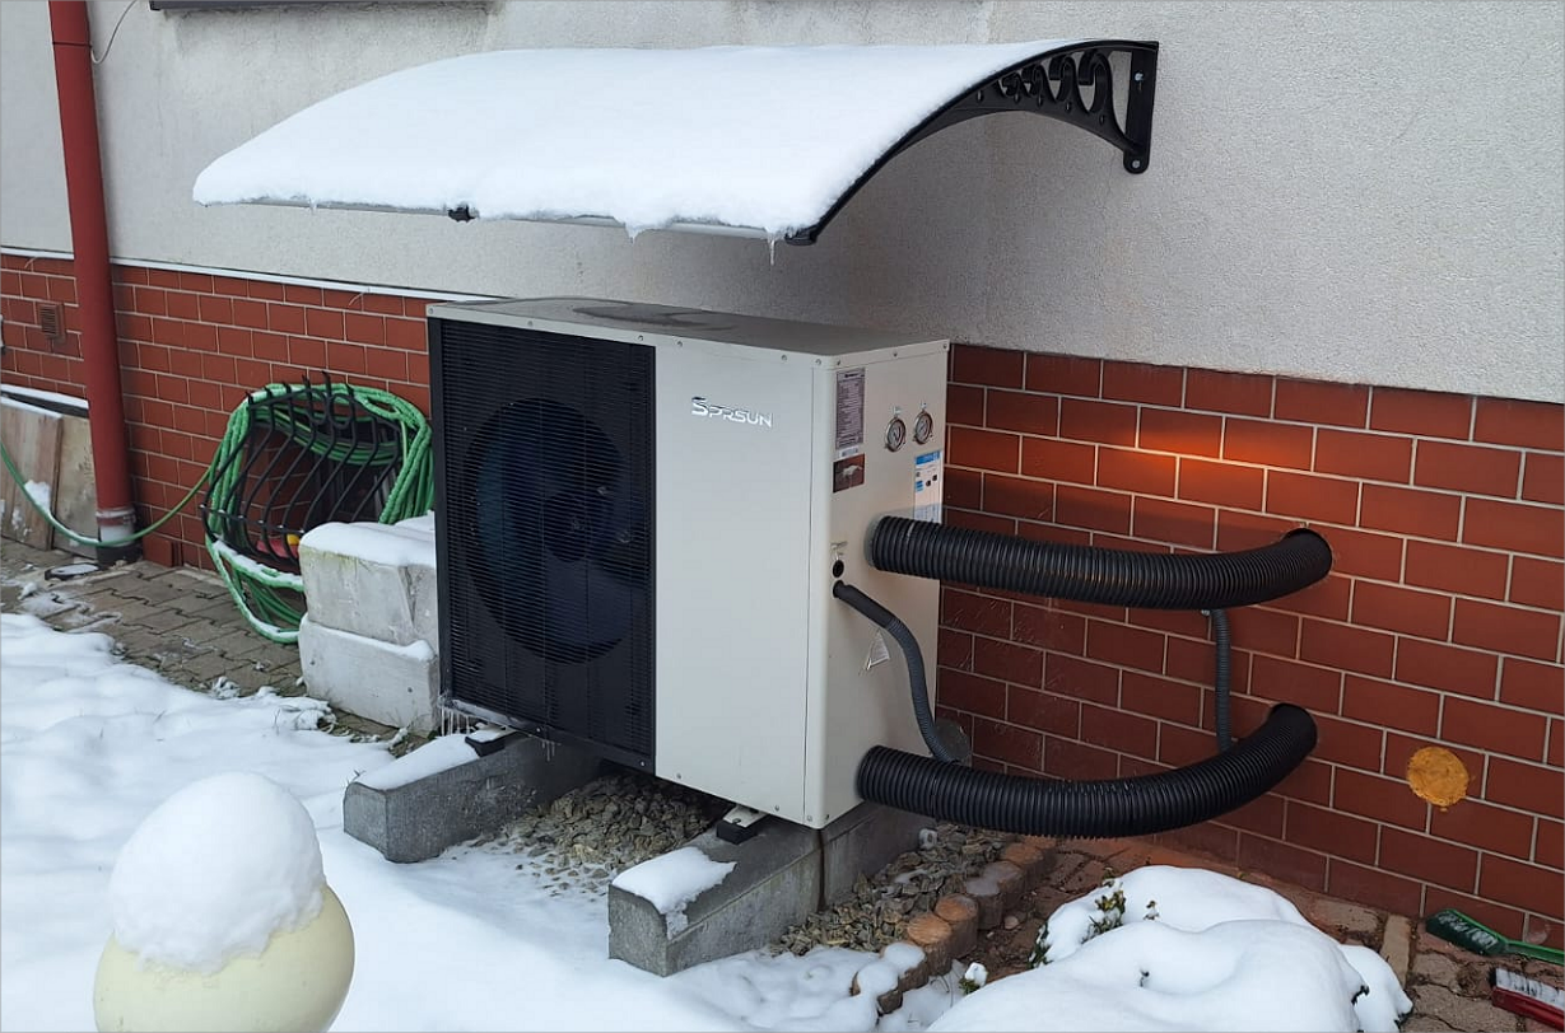 SPRSUN-Wärmepumpe in den Niederlanden